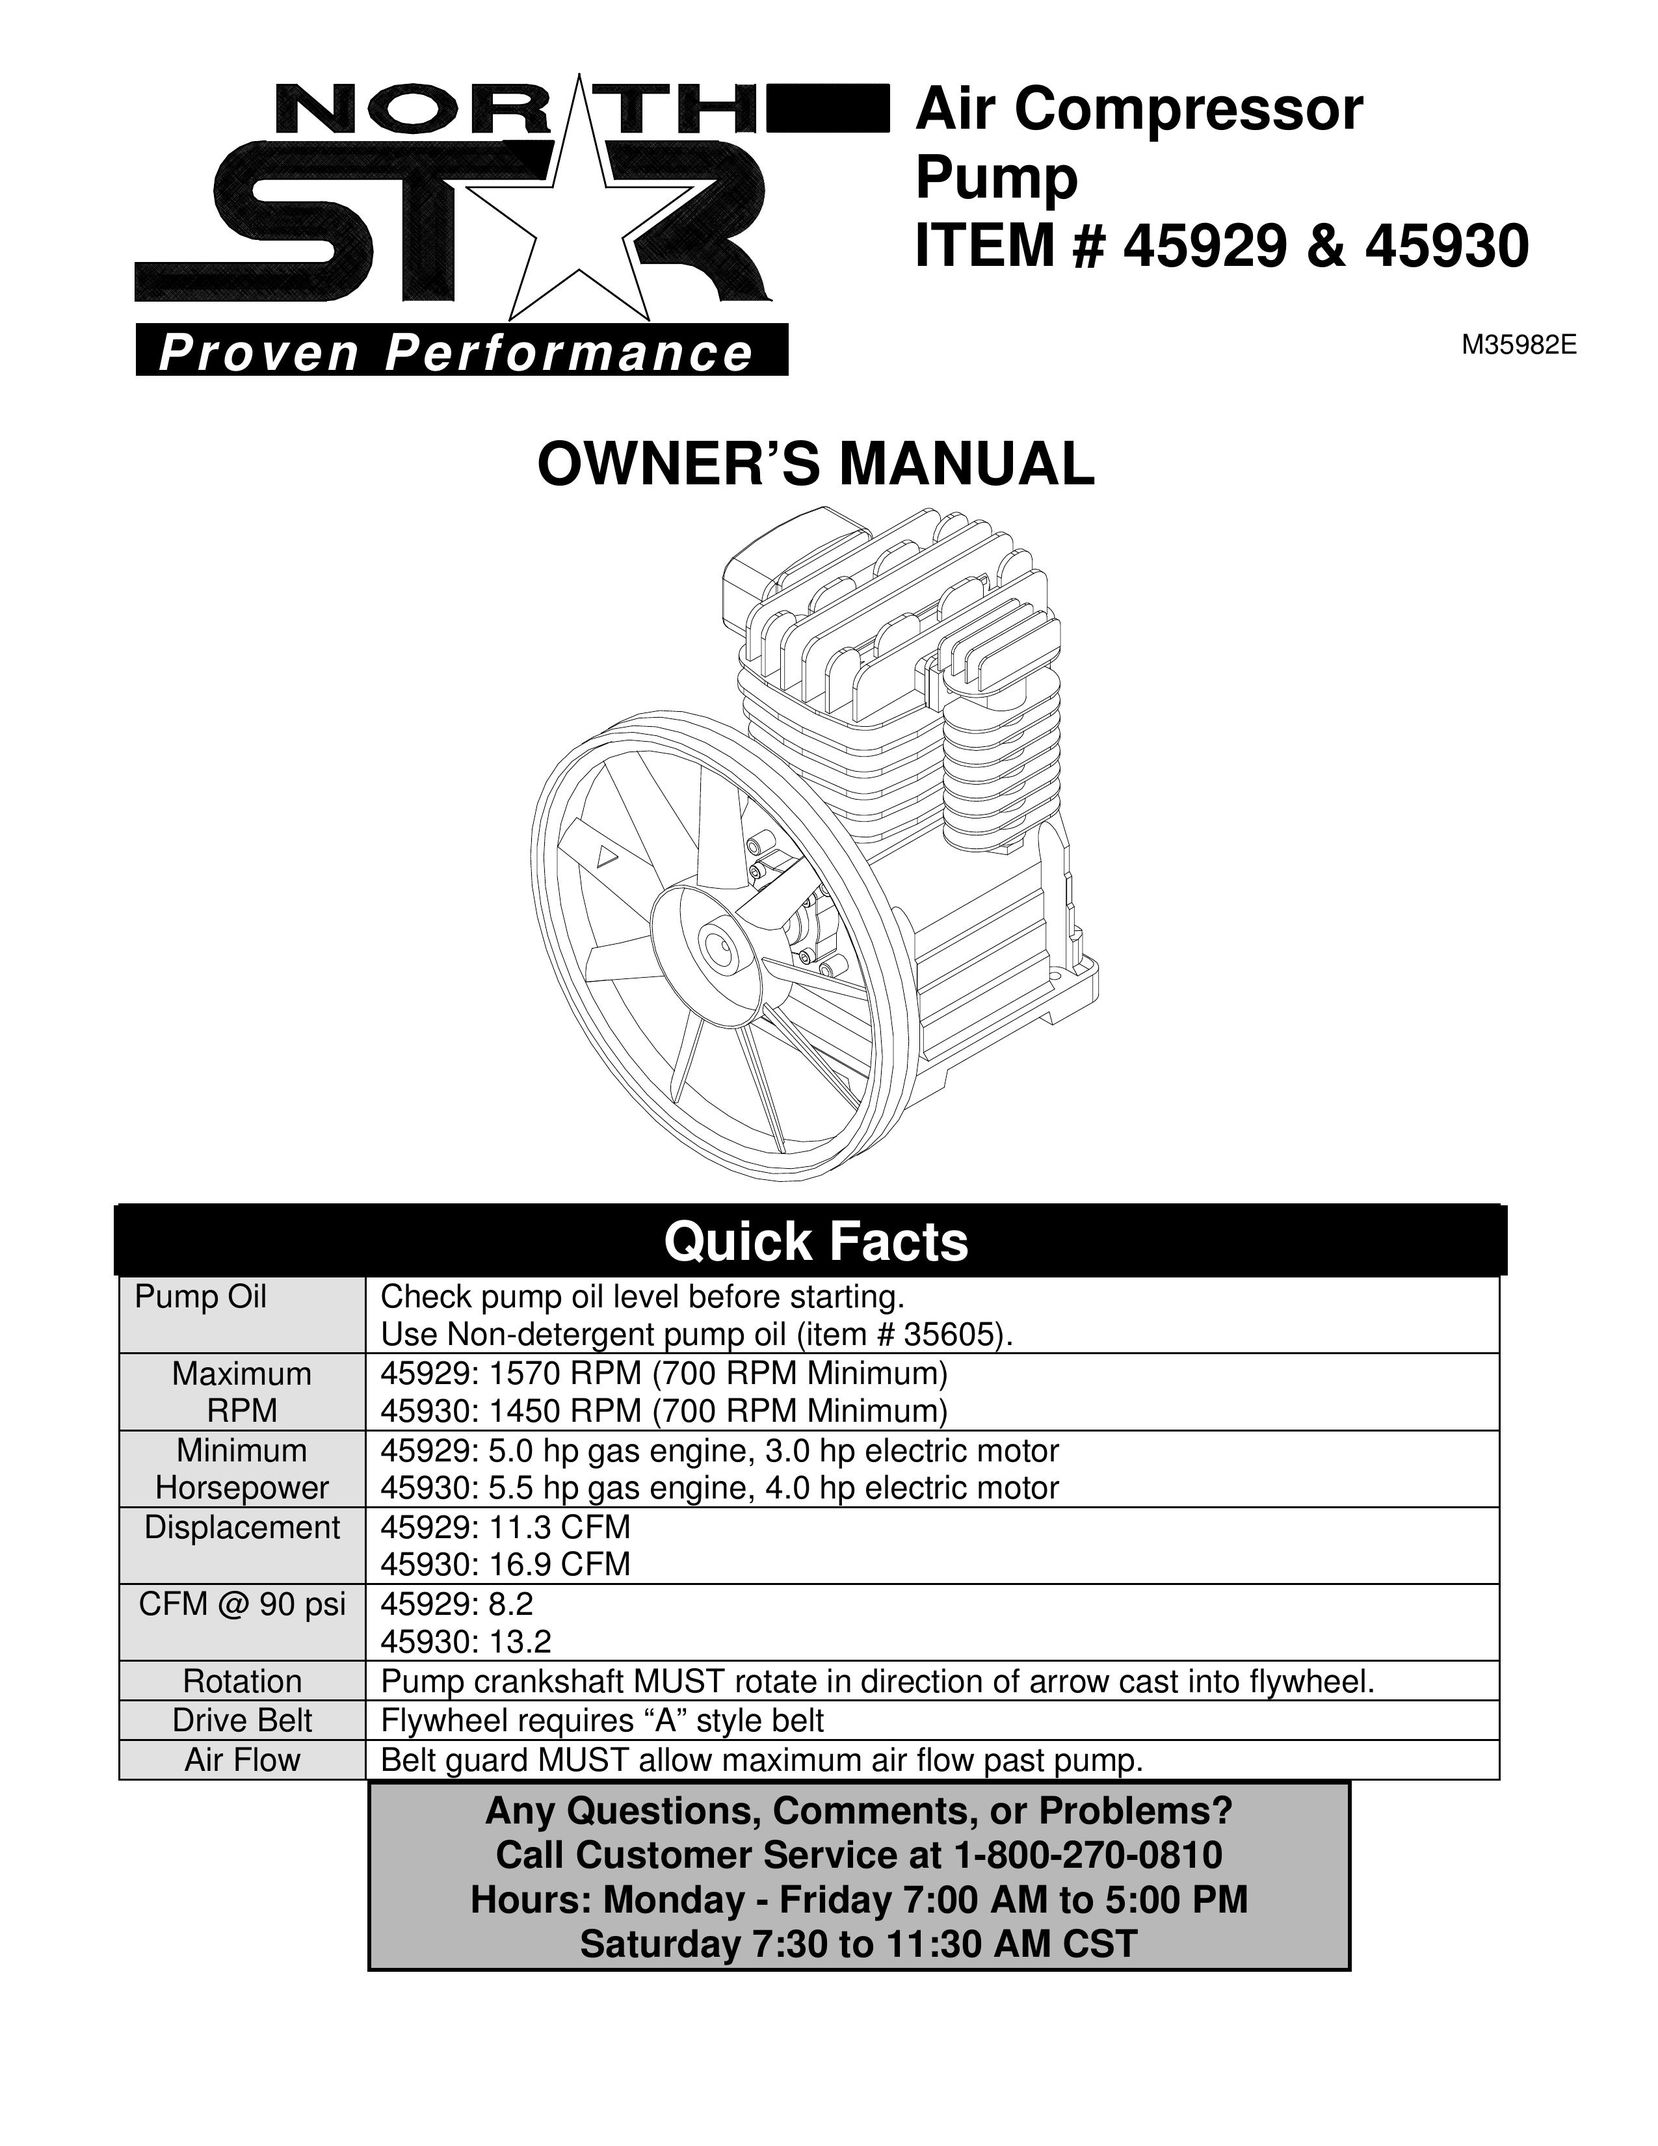 Northern Industrial Tools 45930 Air Compressor User Manual